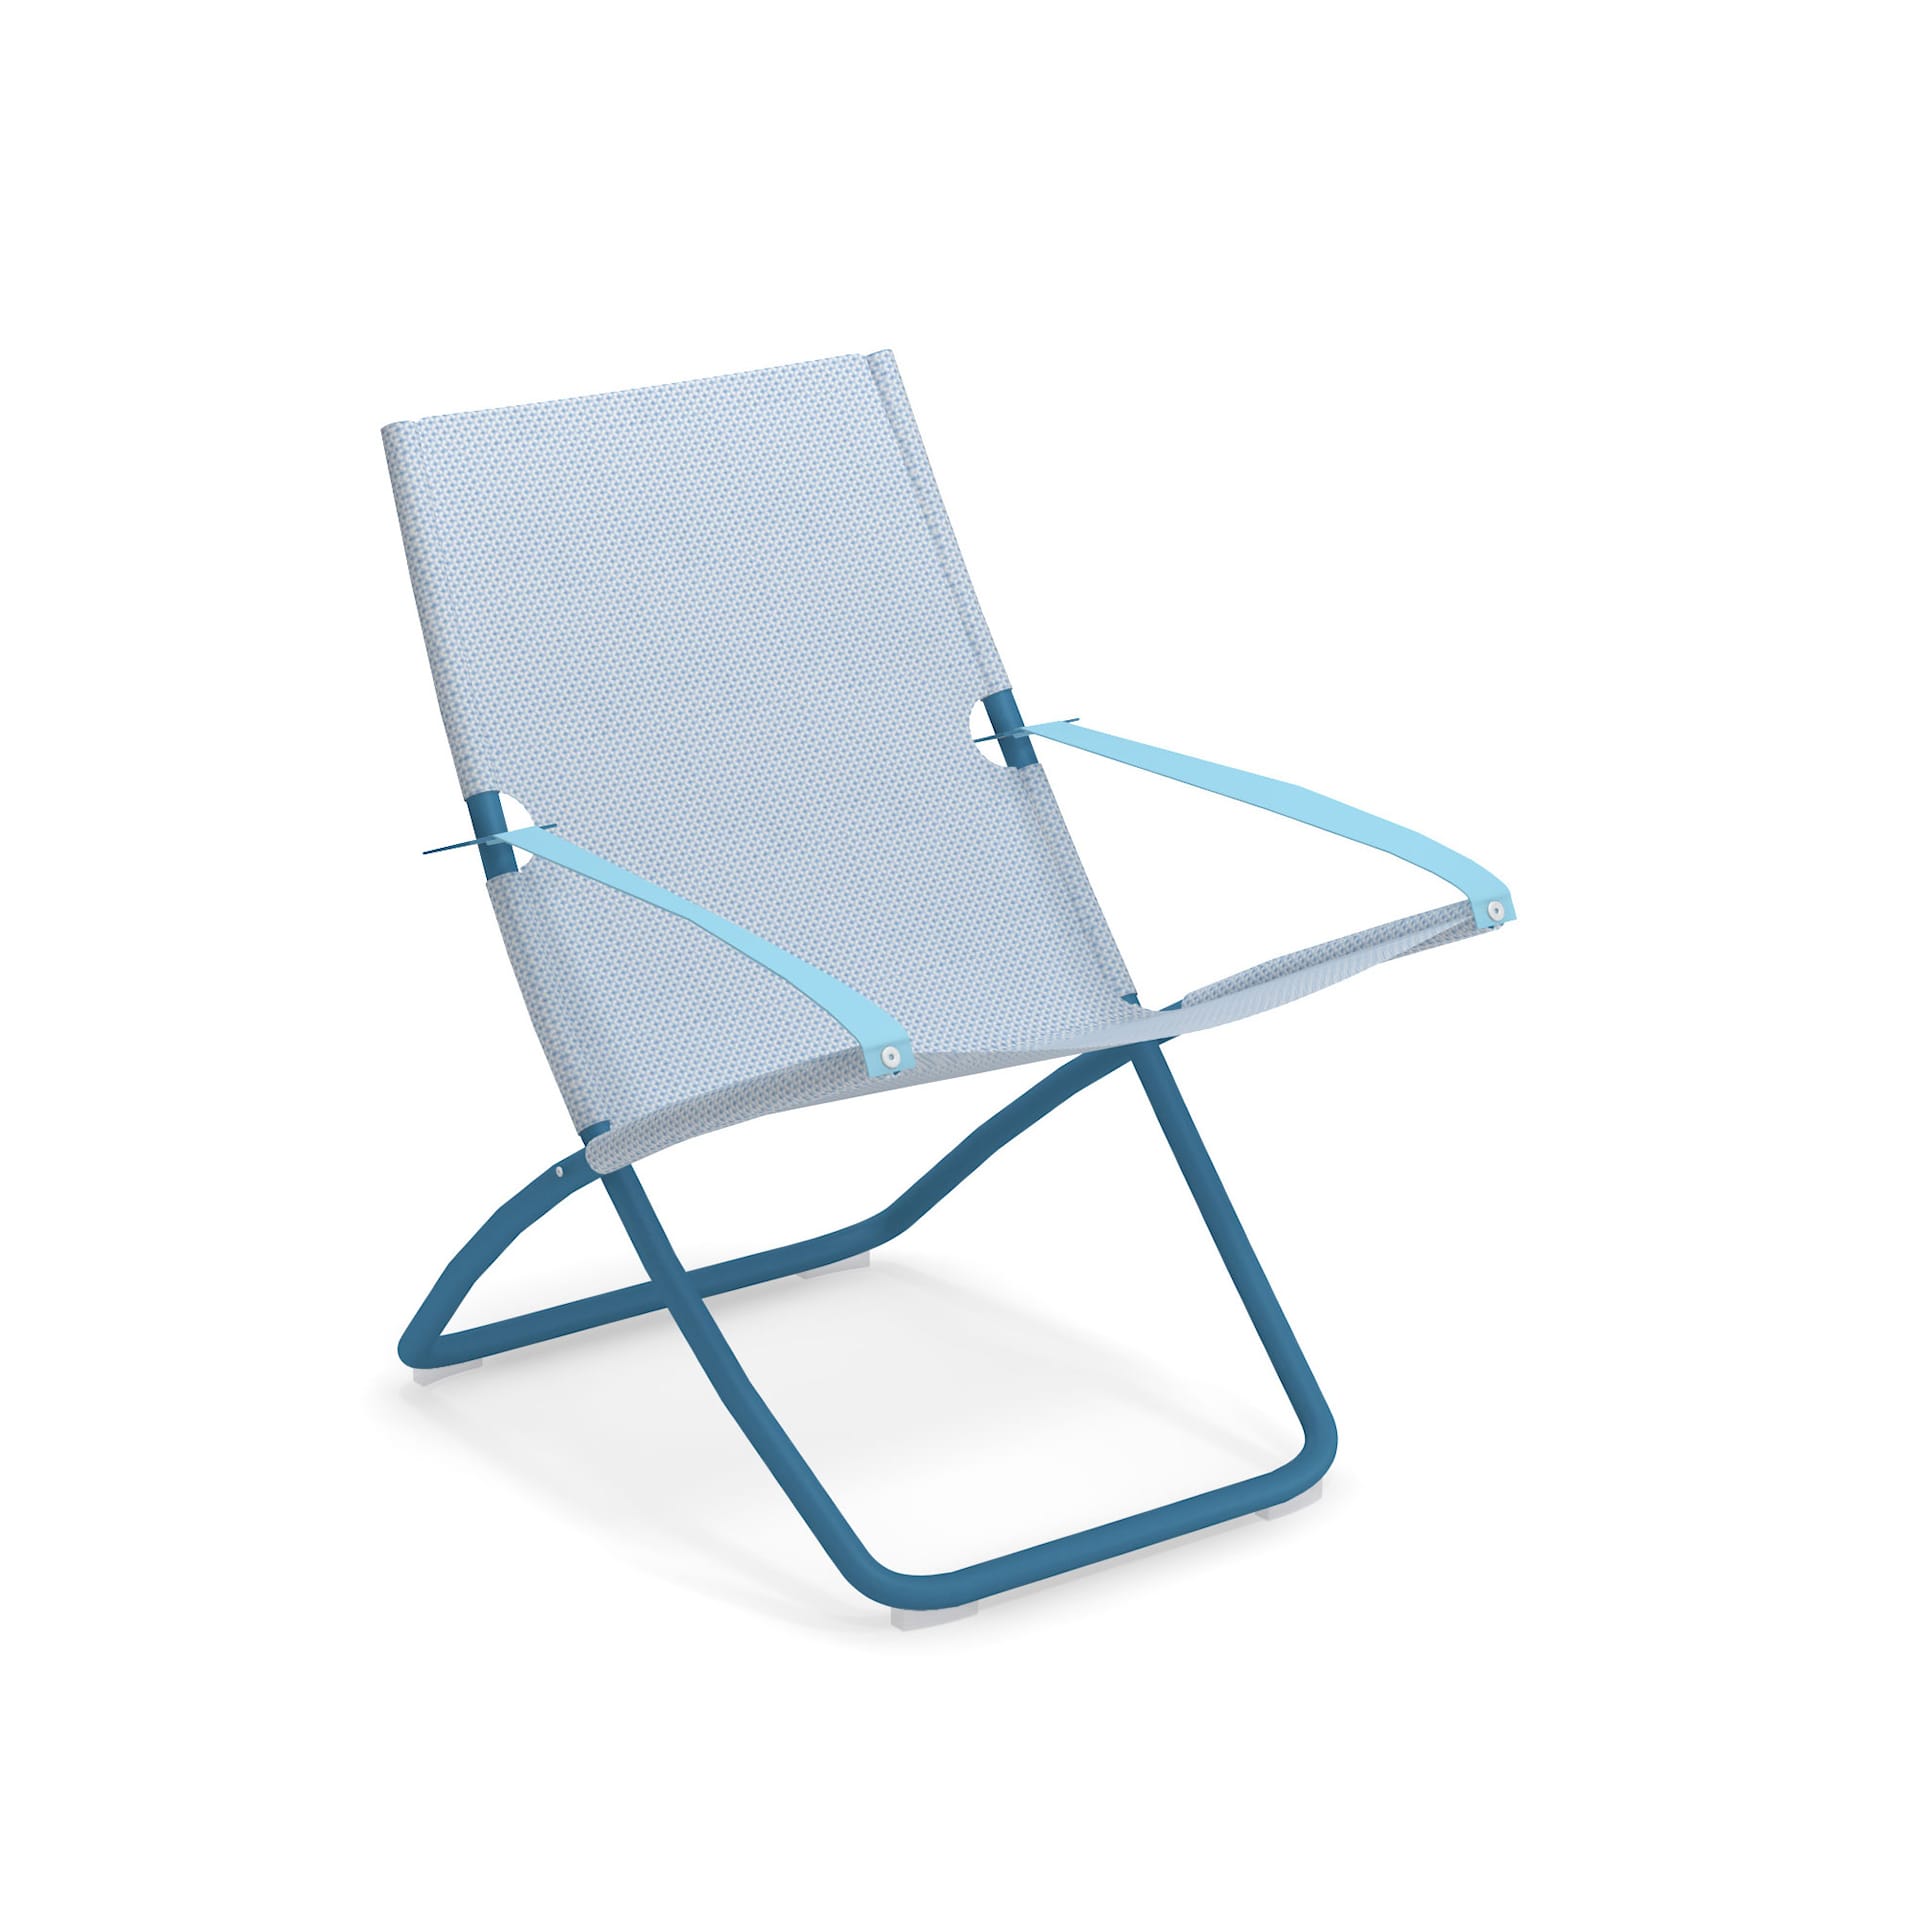 Snooze Deck Chair - EMU - NO GA